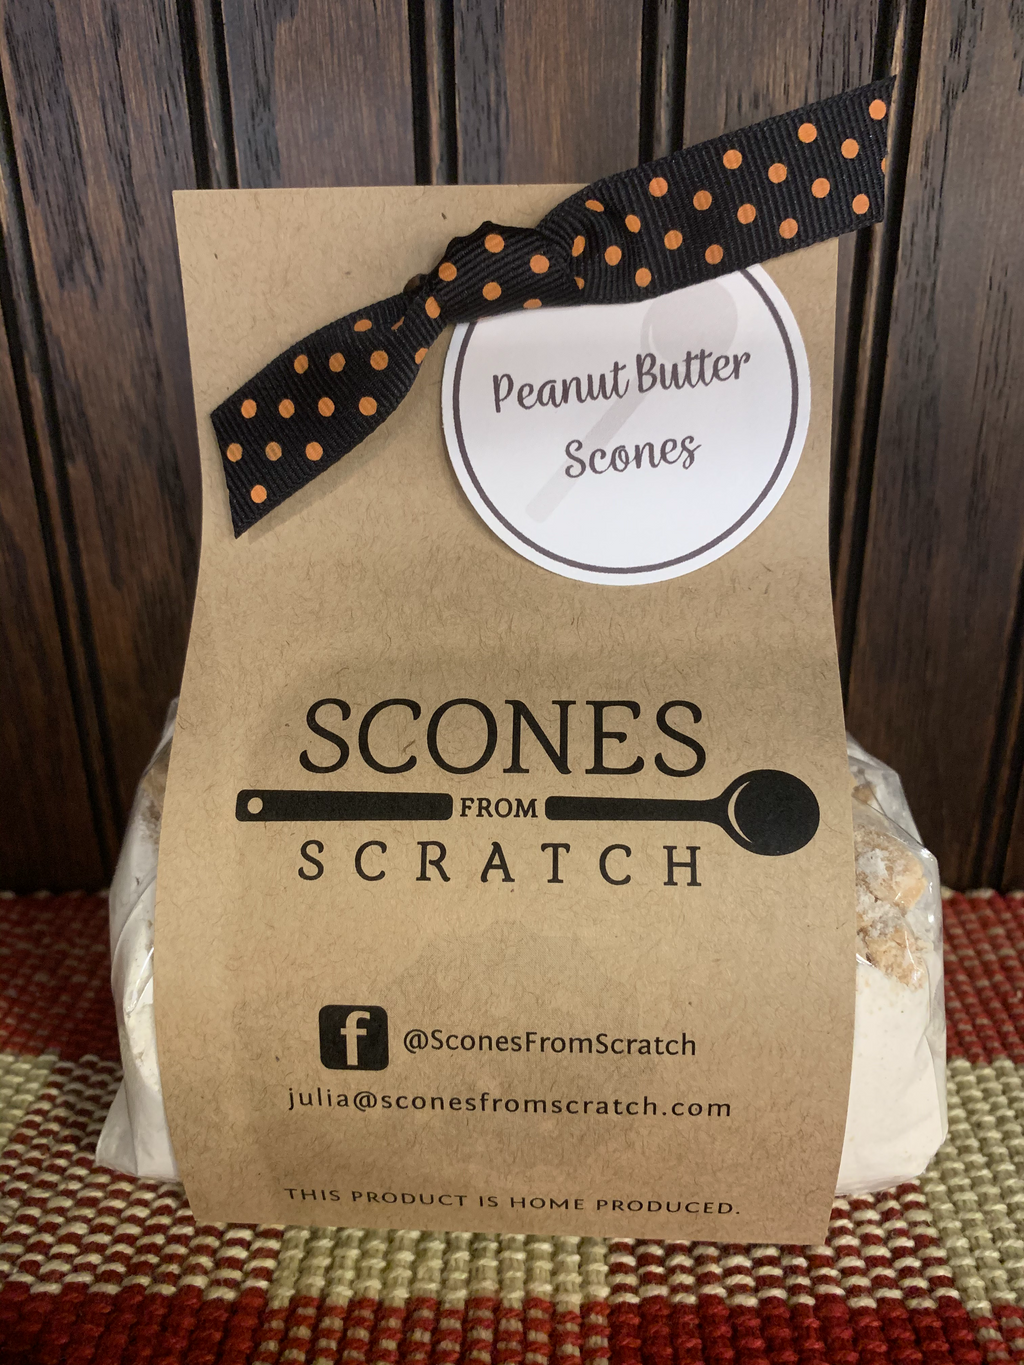 Peanut Butter Scones from Scratch